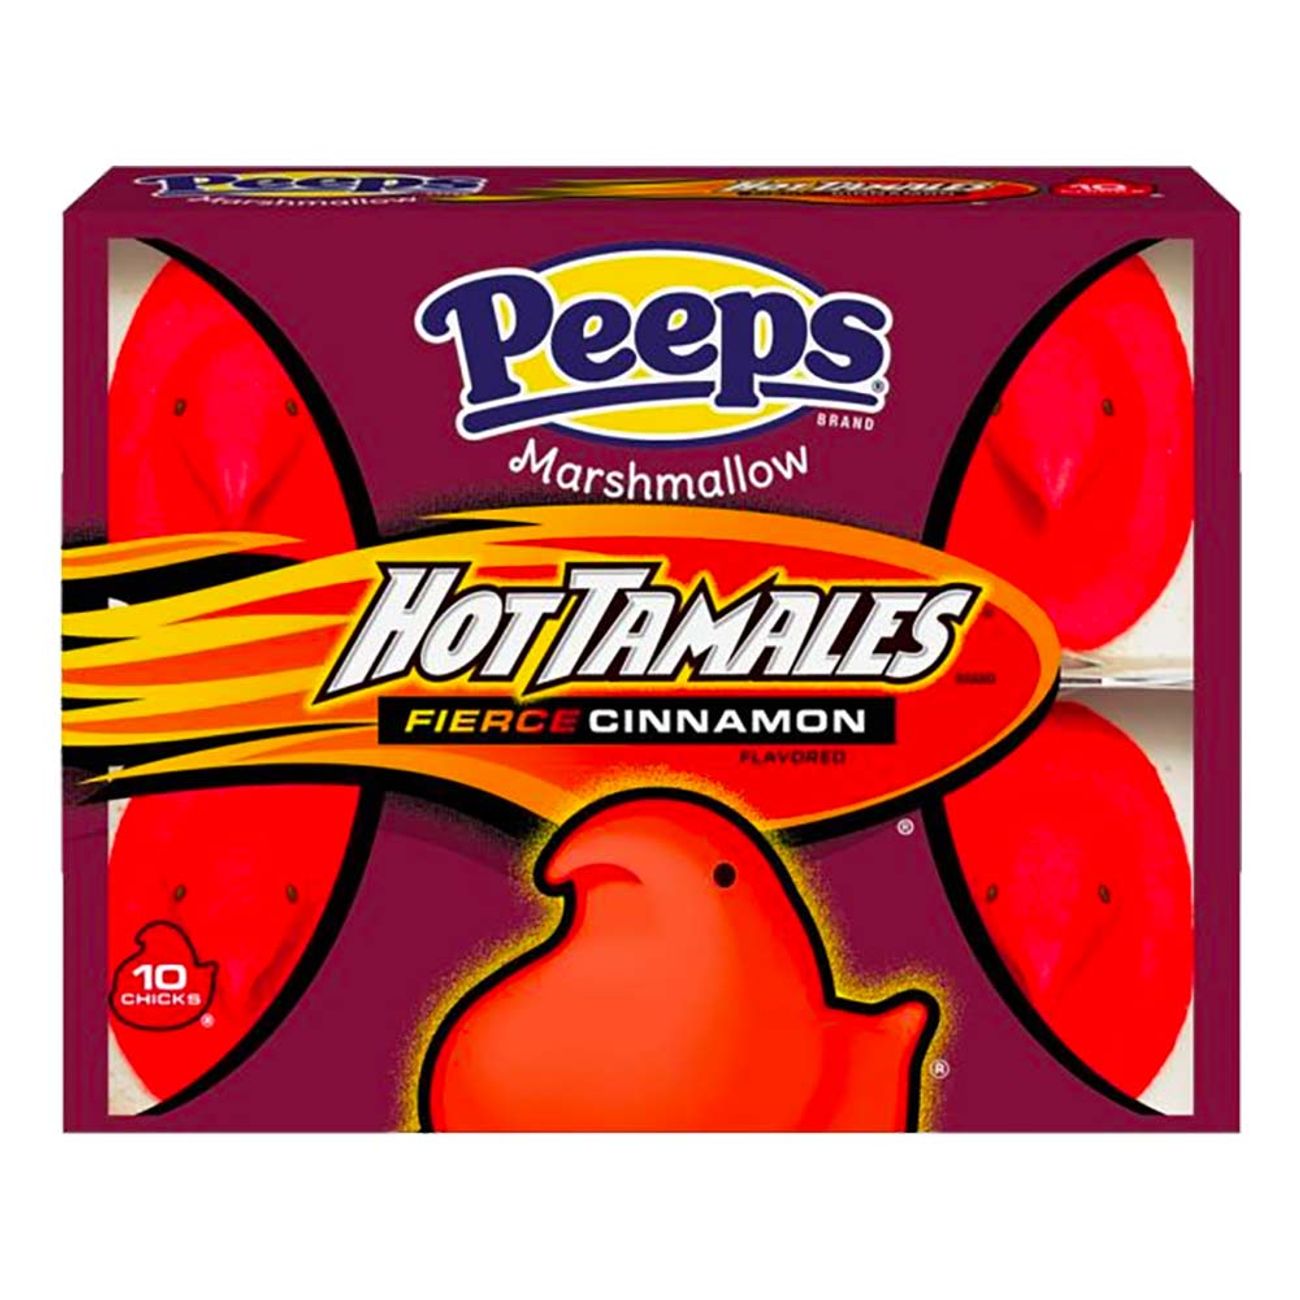 peeps-hot-tamales-cinnamon-marshmallow-chicks-93566-1